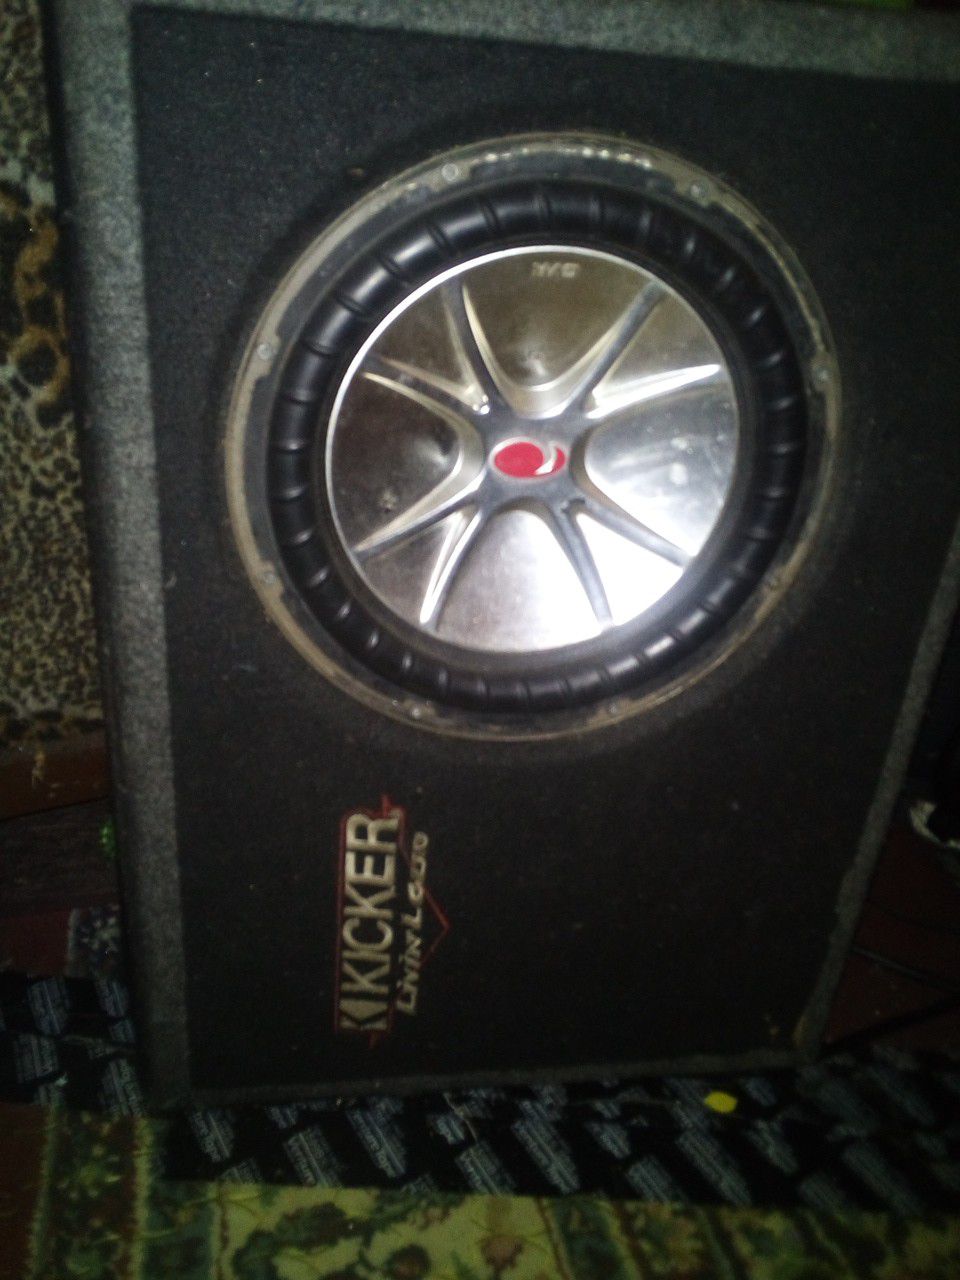 Kicker speaker box